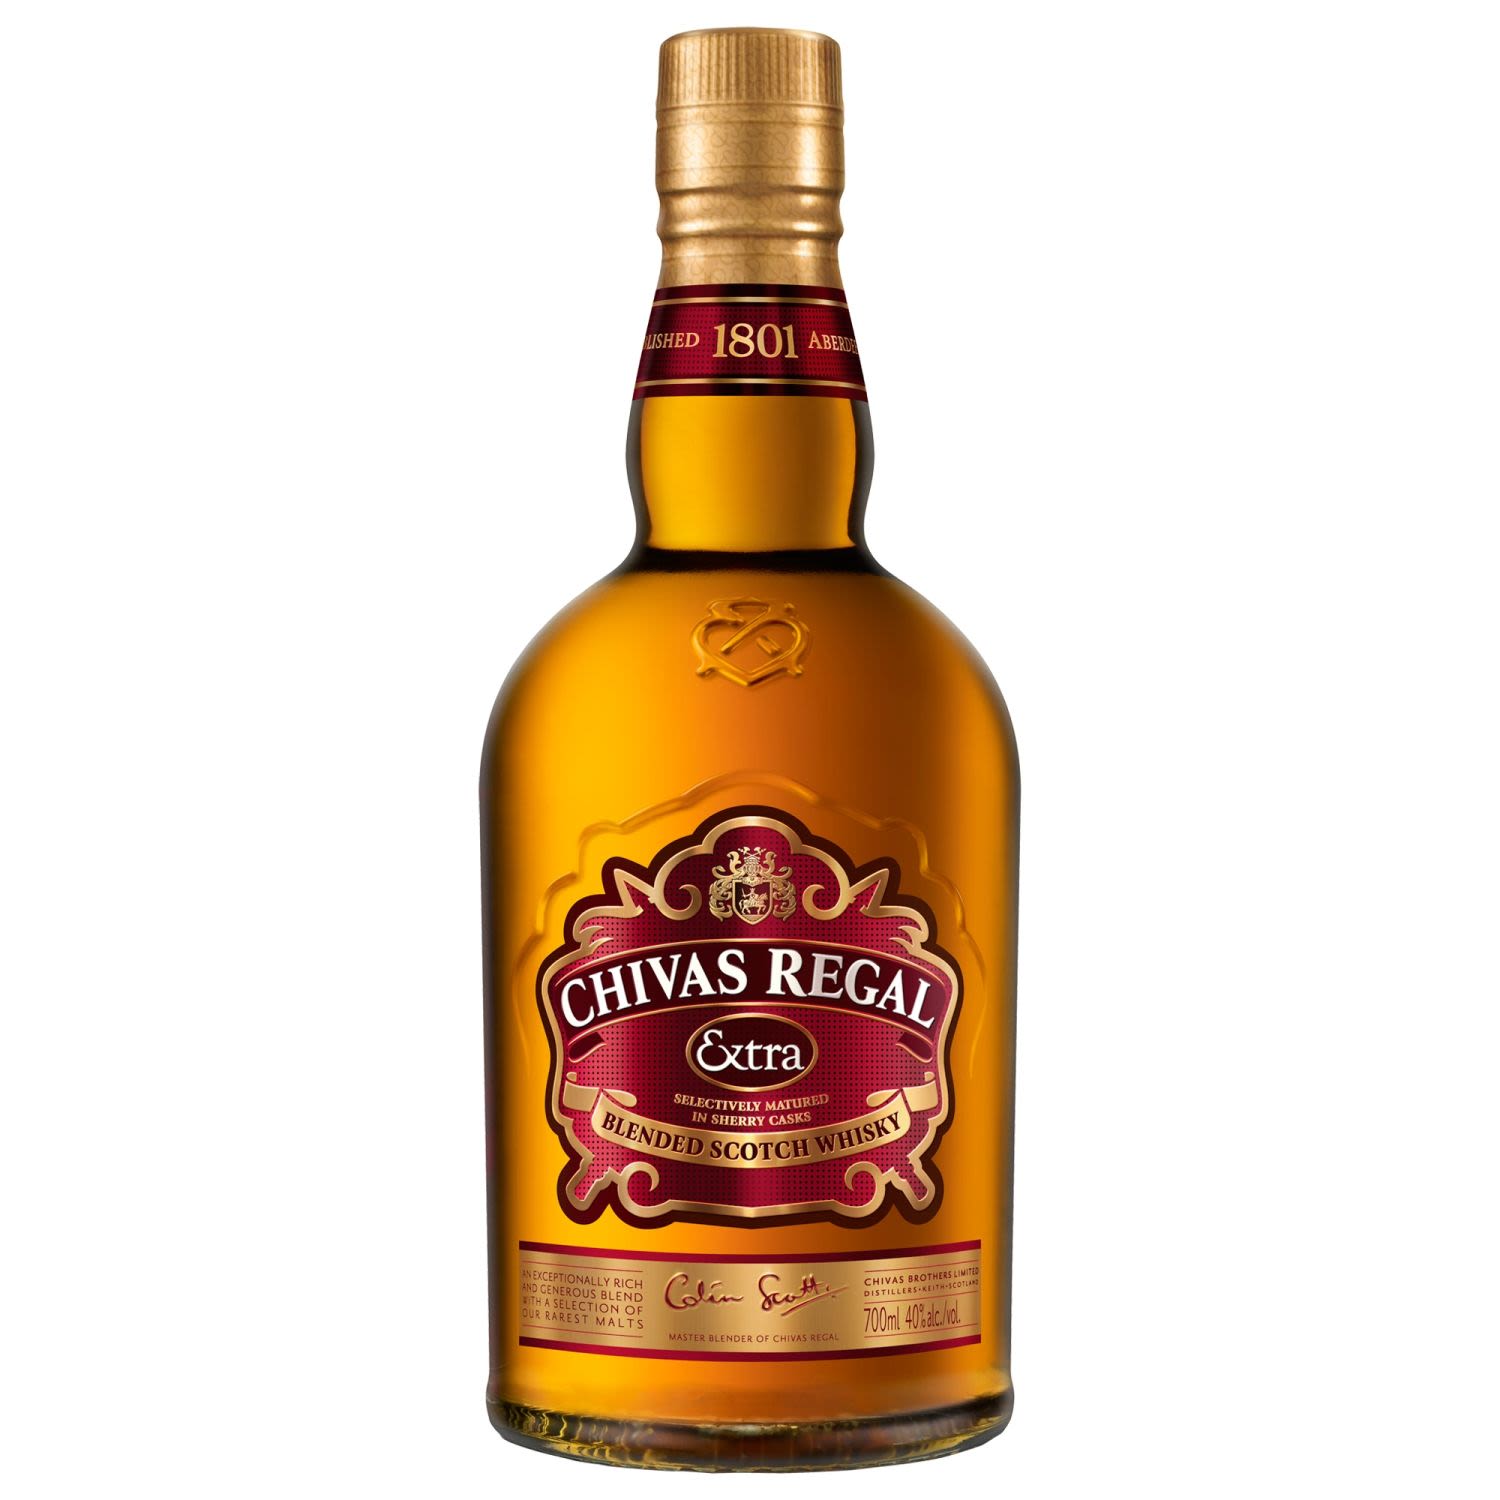 Chivas Regal Extra Blended Scotch Whisky 700mL Bottle